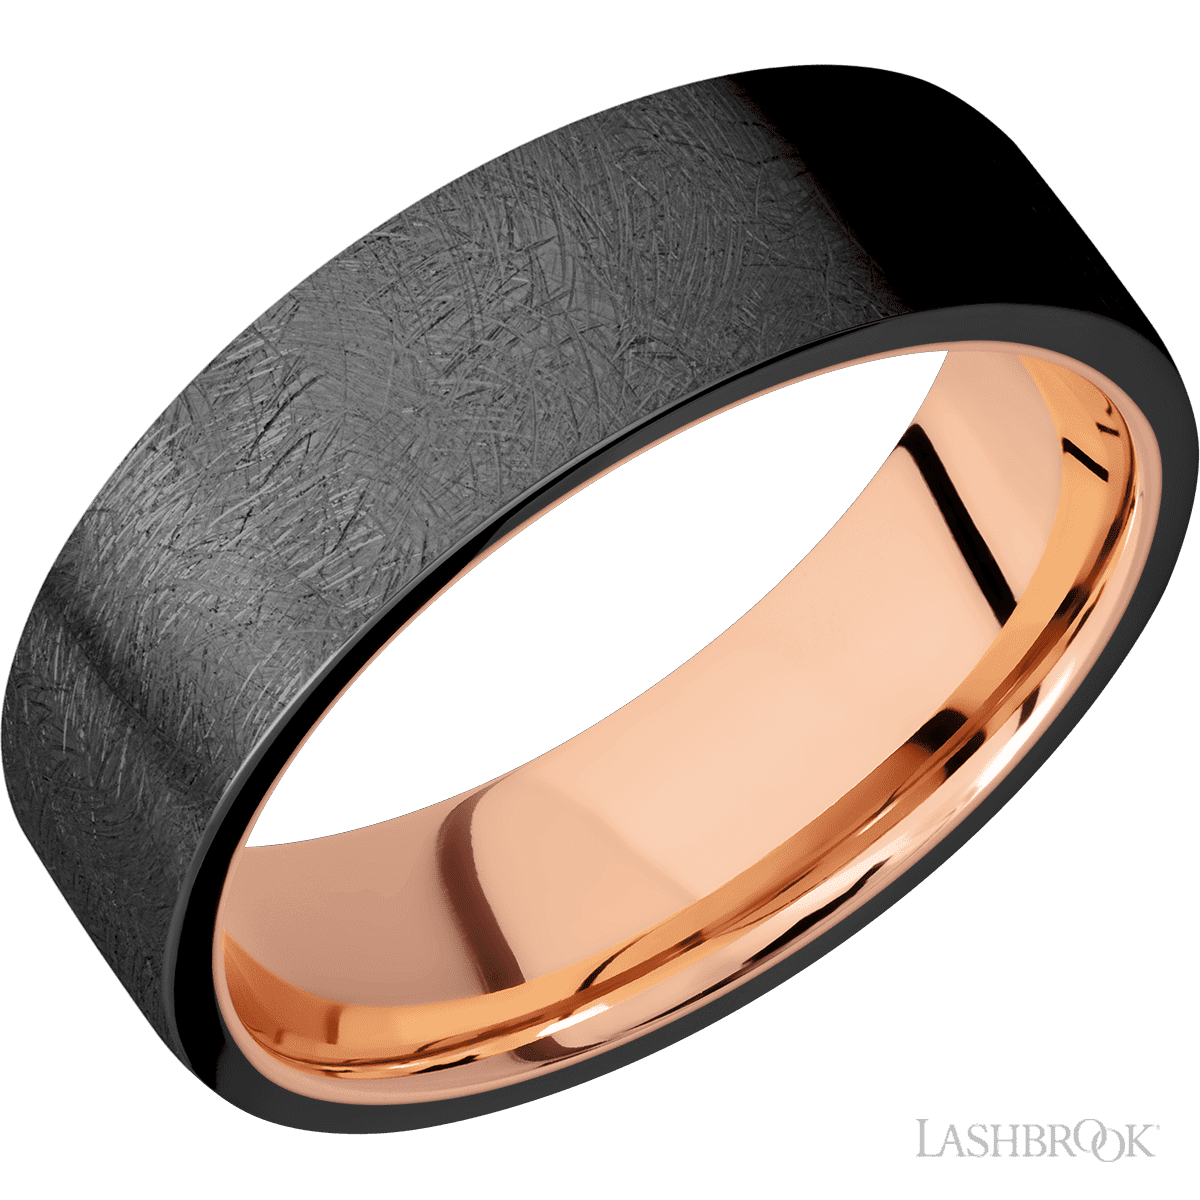 Lashbrook Designs Men's Band Zirconium band featuring 14k Rose Gold sleeve